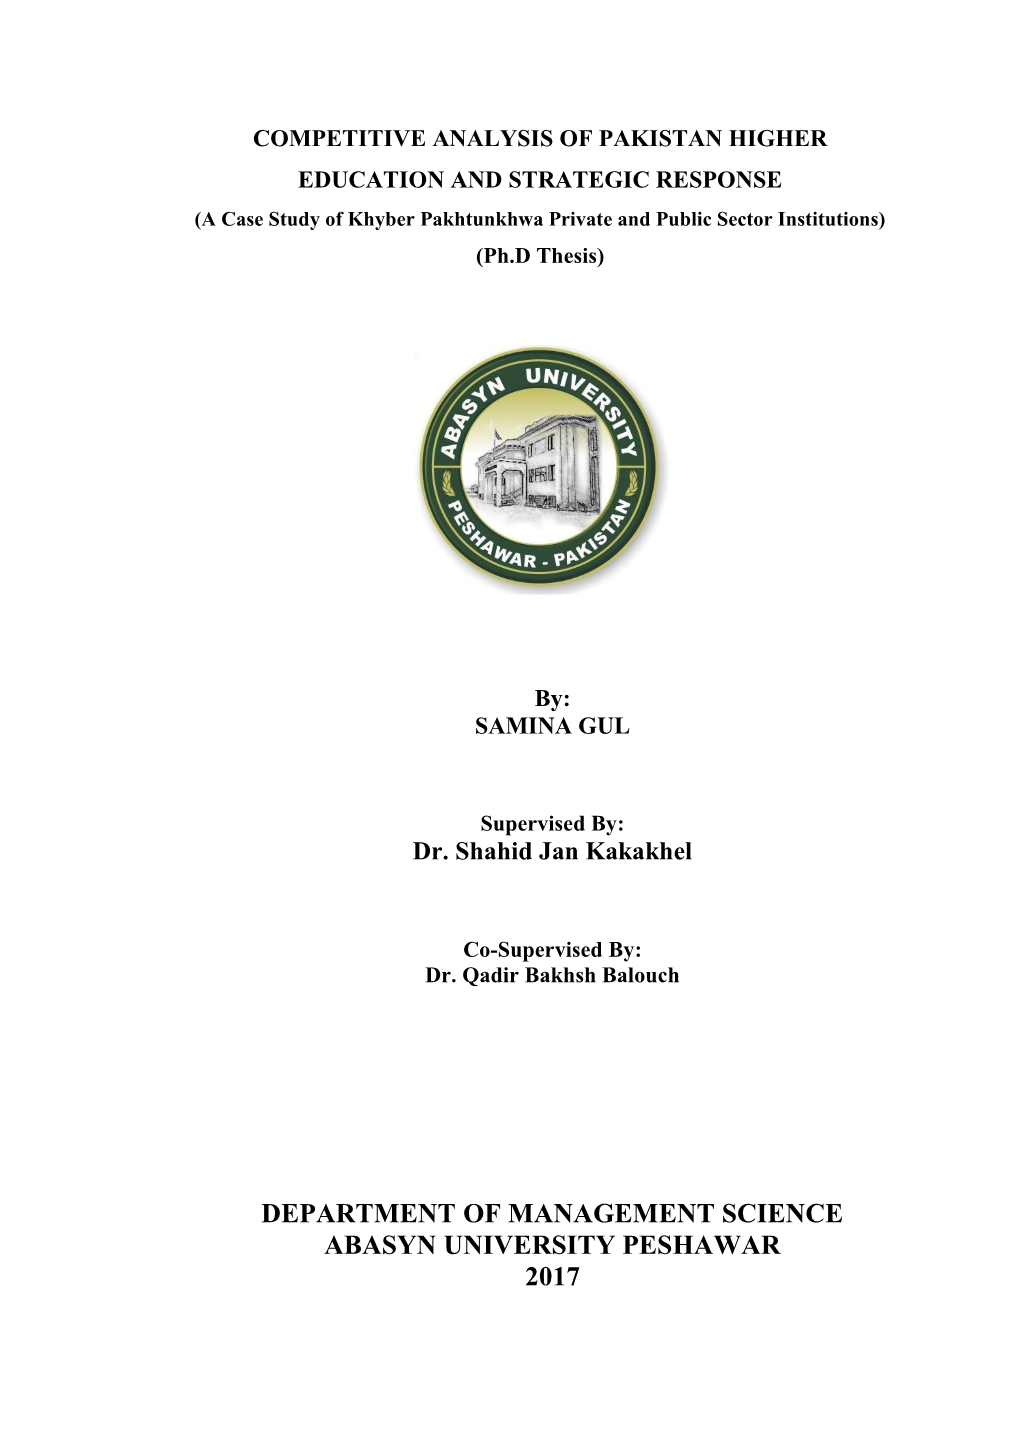 Department of Management Science Abasyn University Peshawar 2017